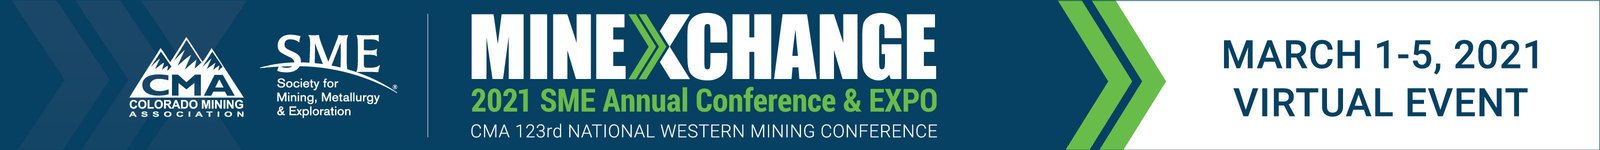 MINEXCHANGE 2021 SME Virtual Annual Conference & Expo logo